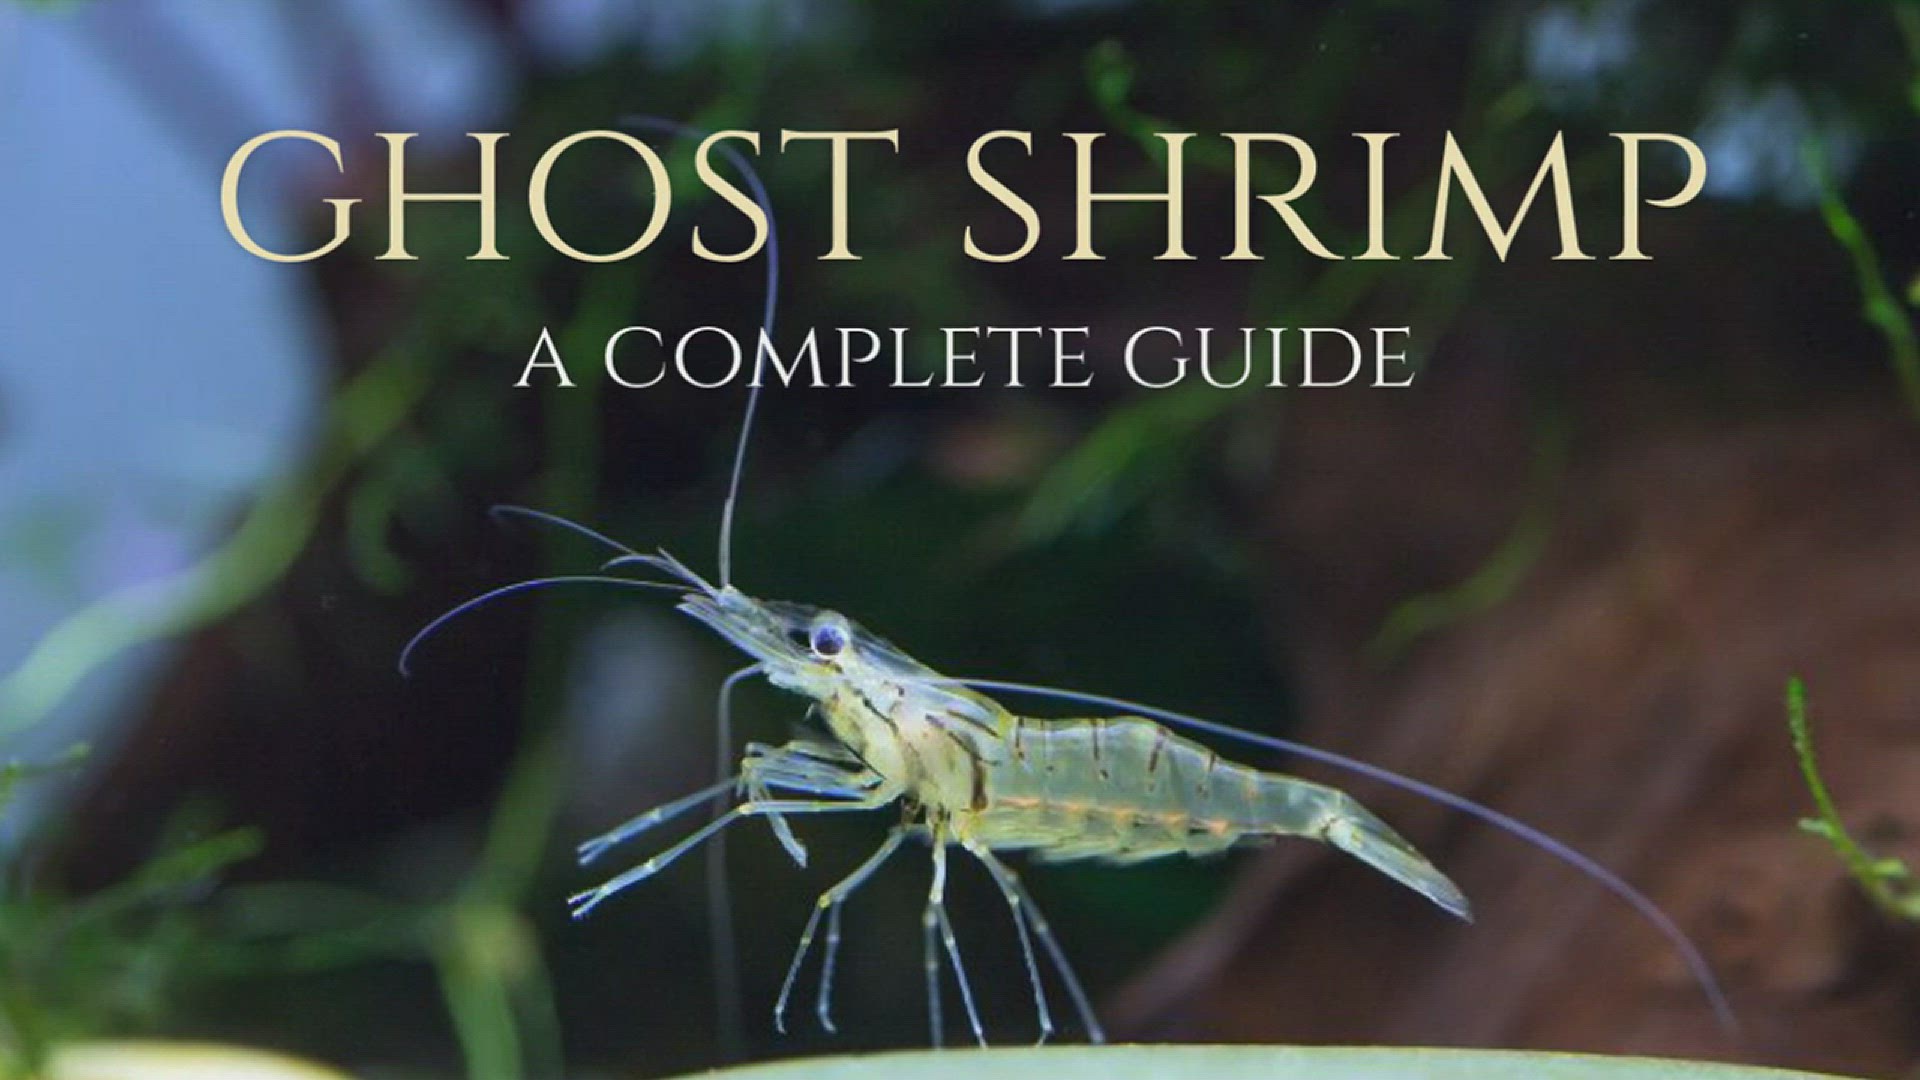 Ghost Shrimp Care Guide & Species Profile